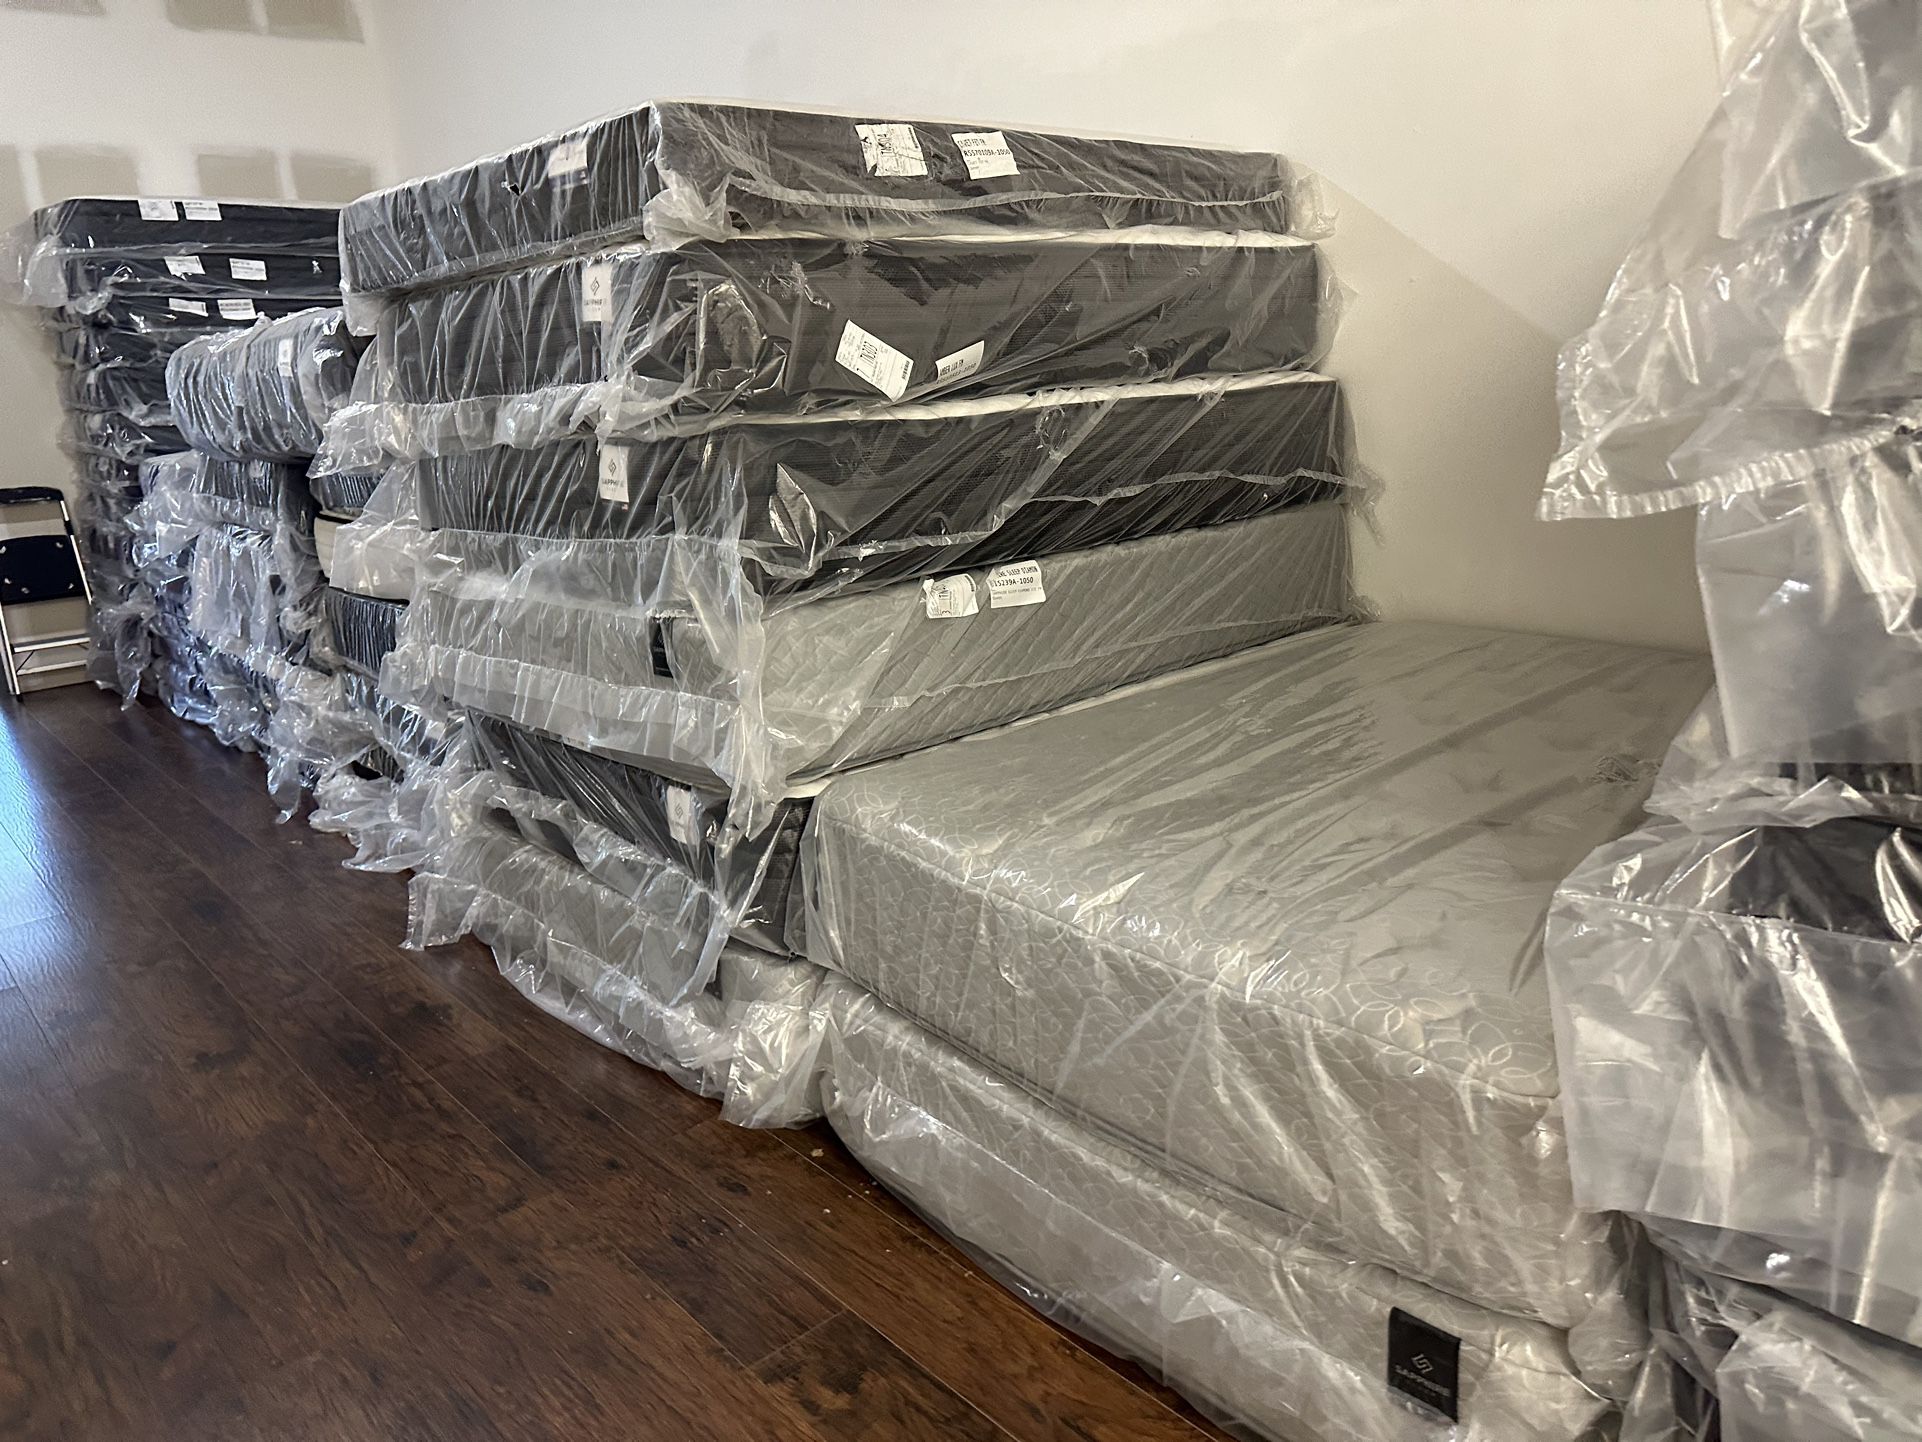 Warehouse full of pillowtop mattresses! Need them gone ASAP!